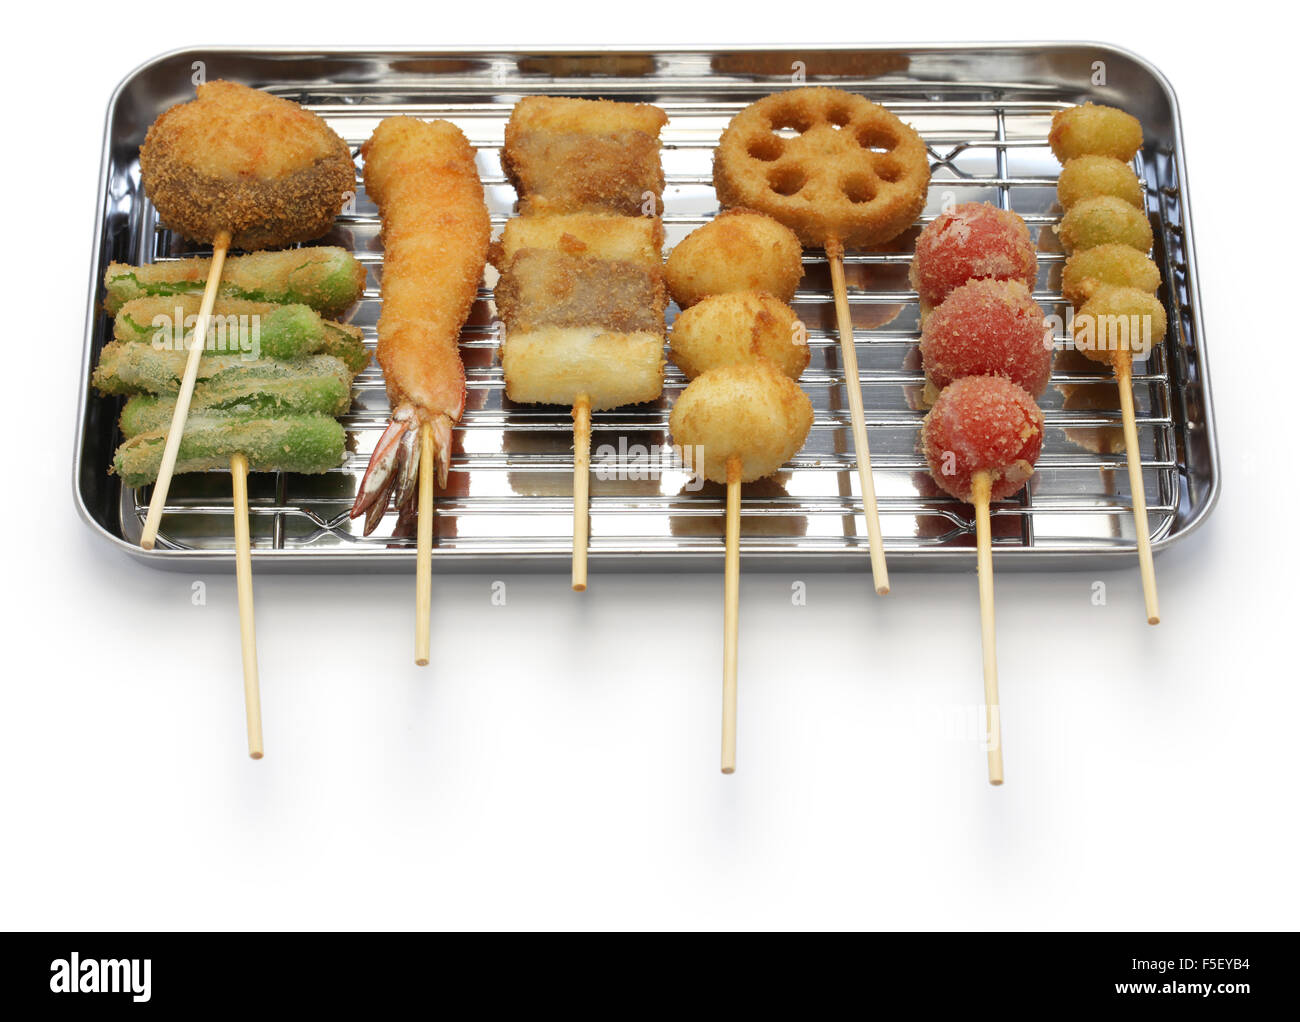 kushiage(deep fried food on a stick),japanese food Stock Photo